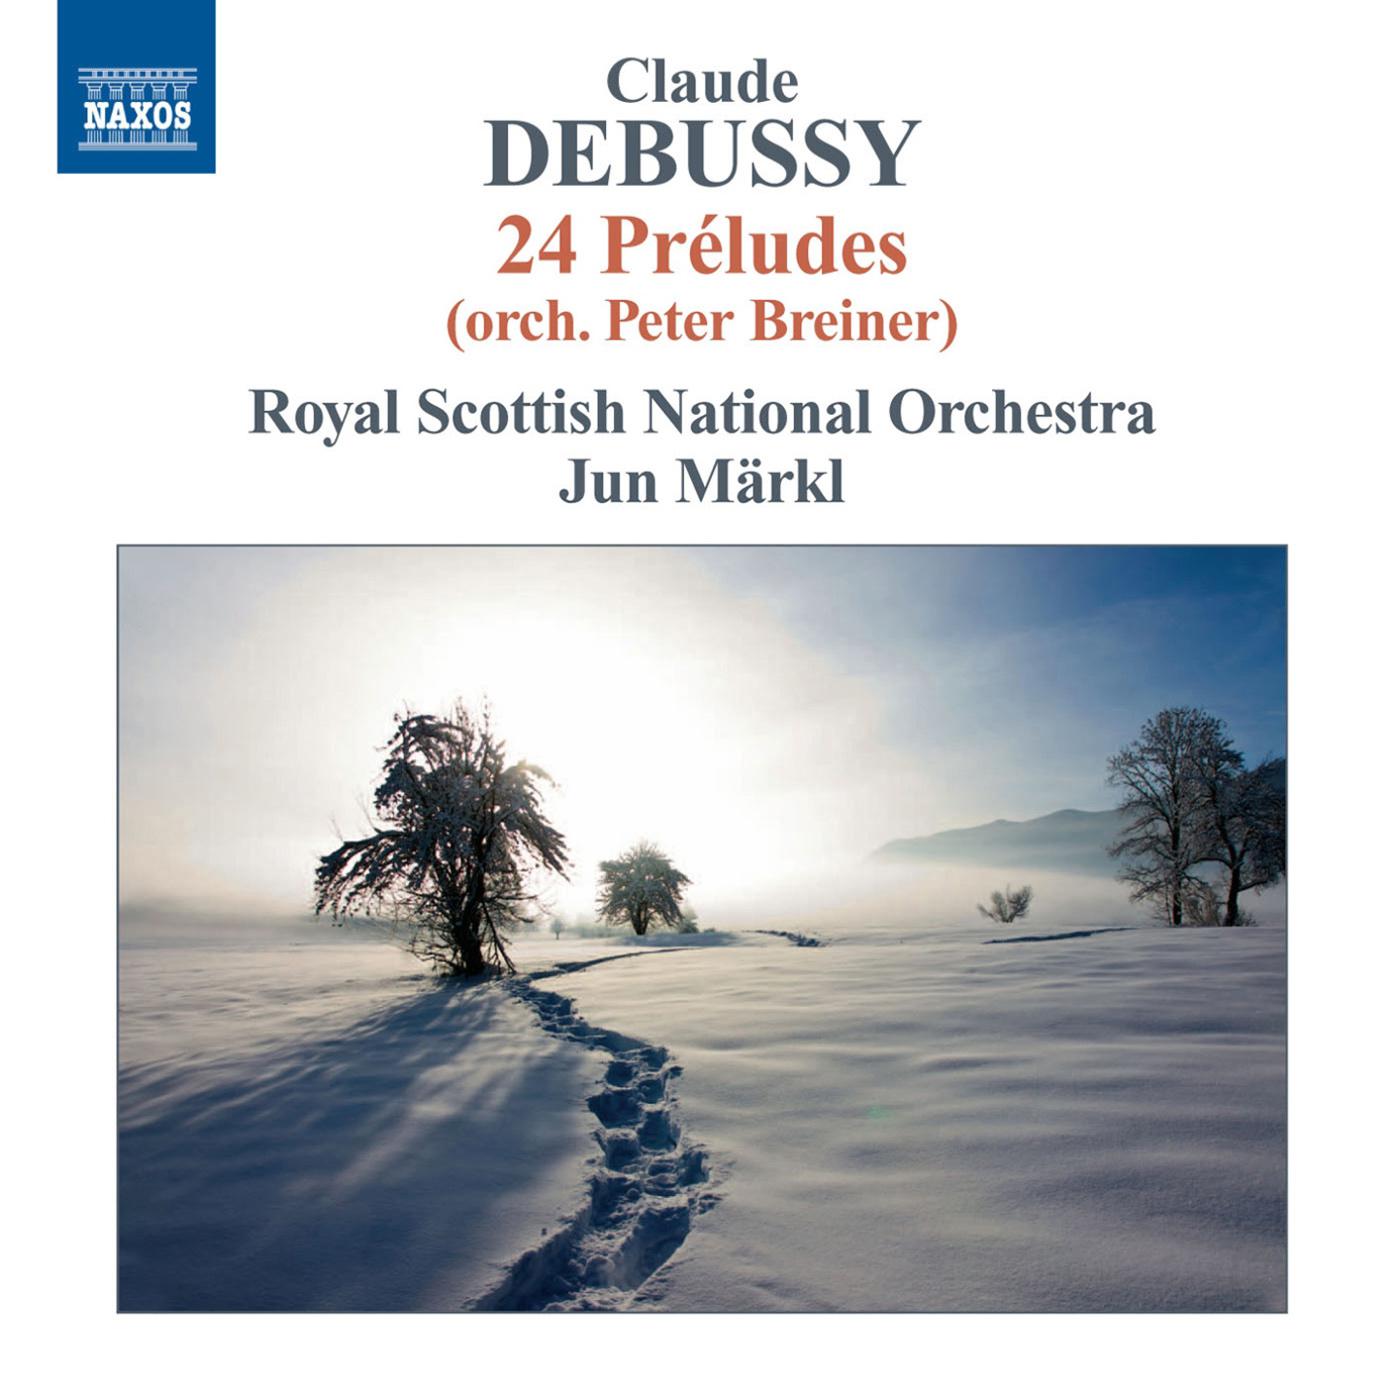 Preludes, Book 1 (arr. P. Breiner for orchestra): No. 1. Danseuses de Delphes Preludes, Book 1 (arr. P. Breiner for orchestra)